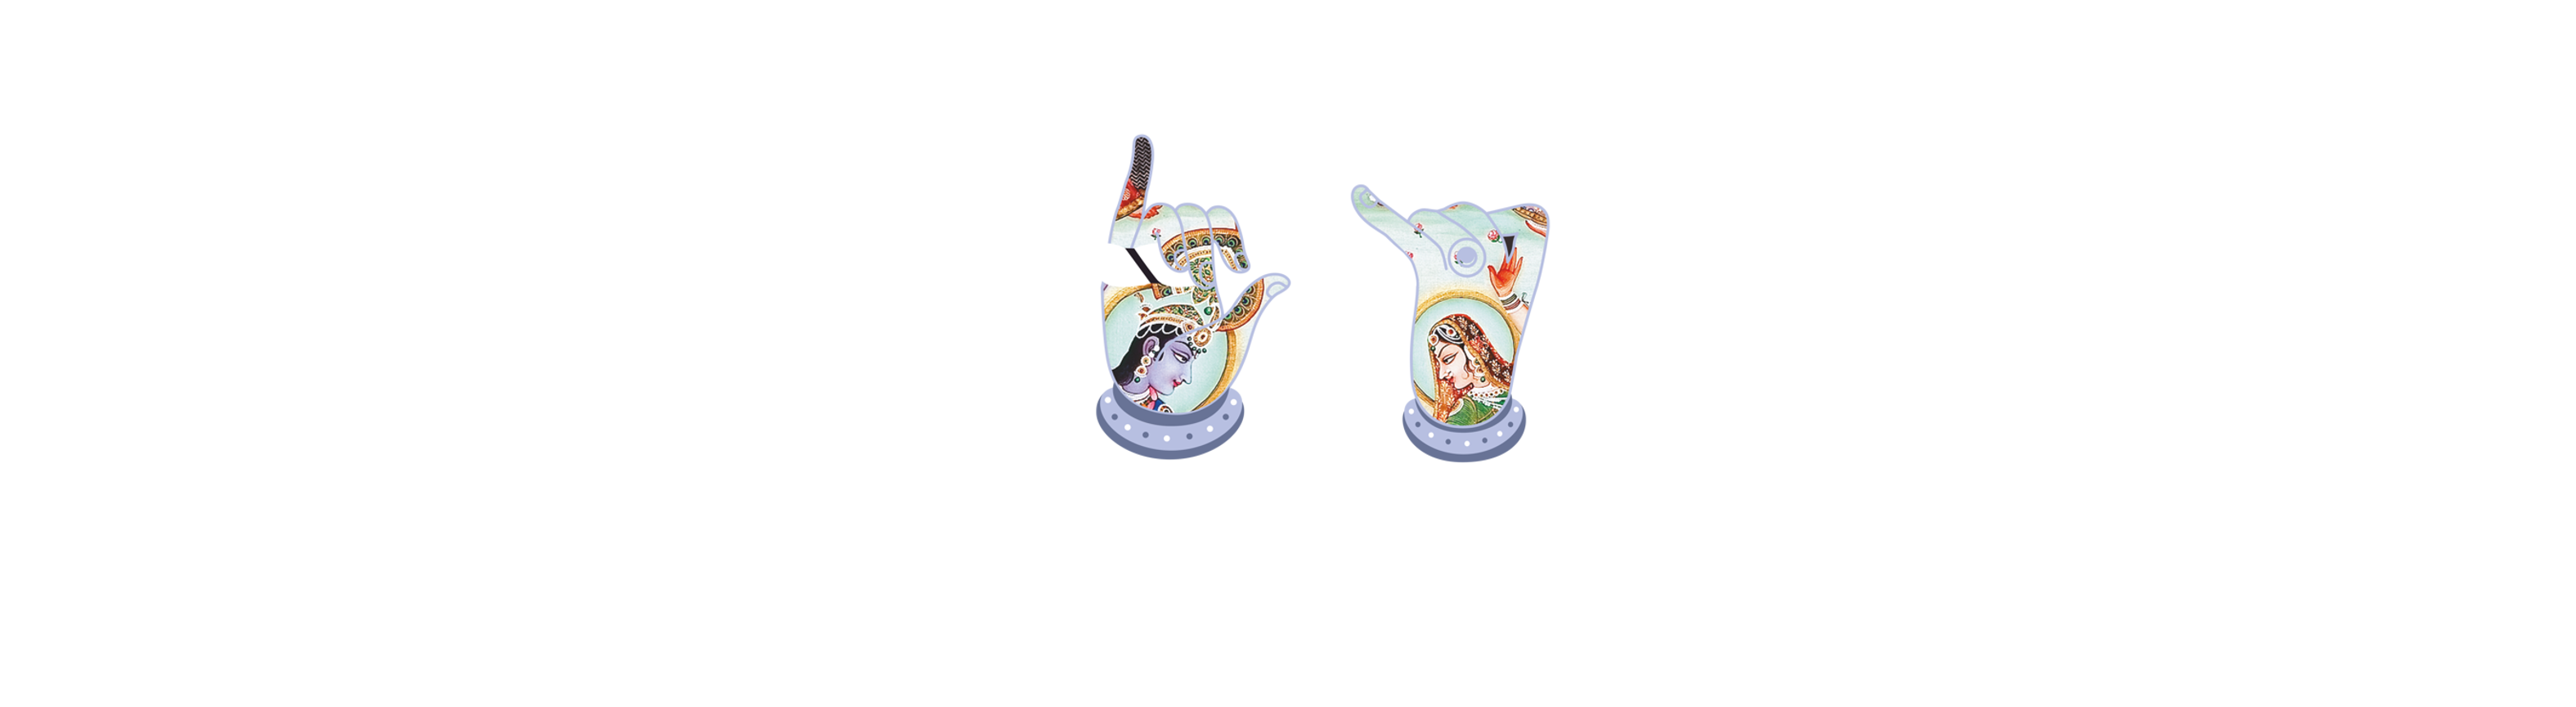 MOSA Foundation